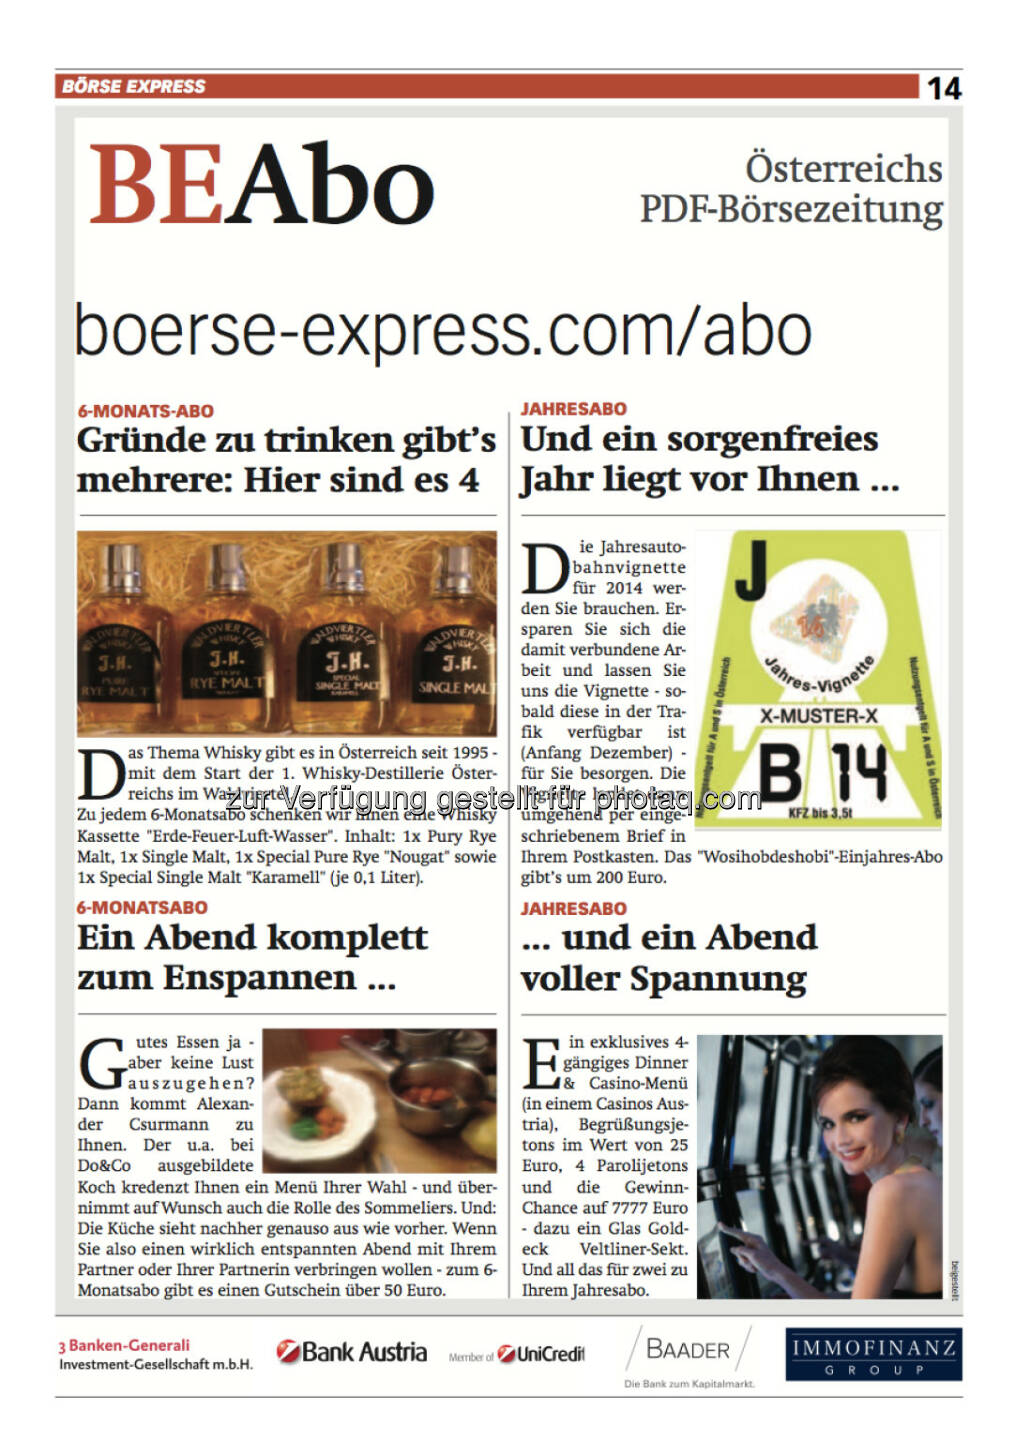 Börse Express-PDF neu: Abohinweise http://www.boerse-express.com